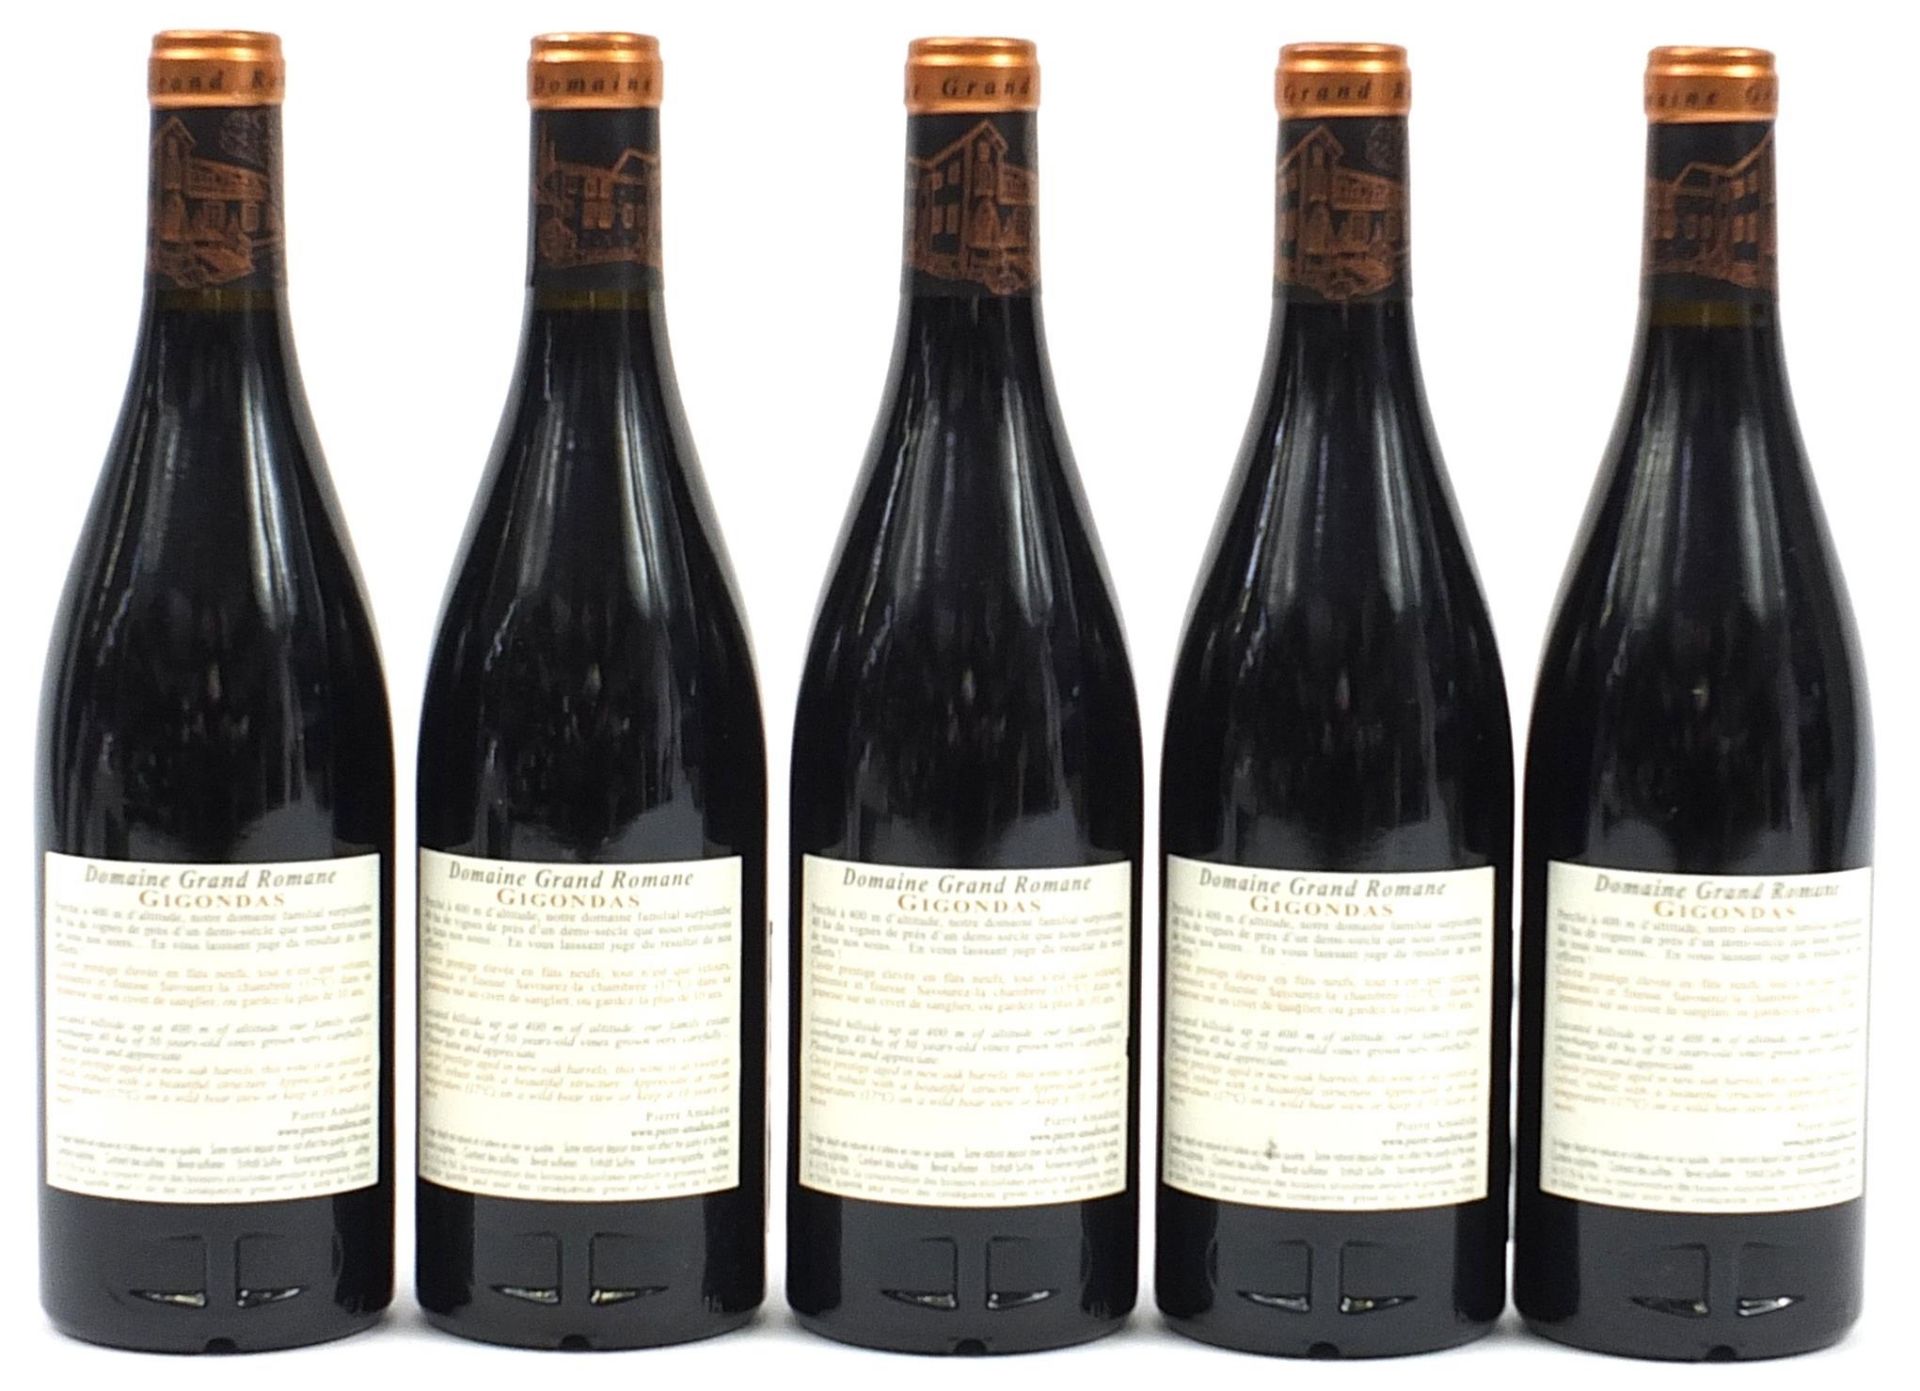 Five bottles of 2005 Domaine Grand Romaine Gigondas Cuvee red wine - Image 2 of 2